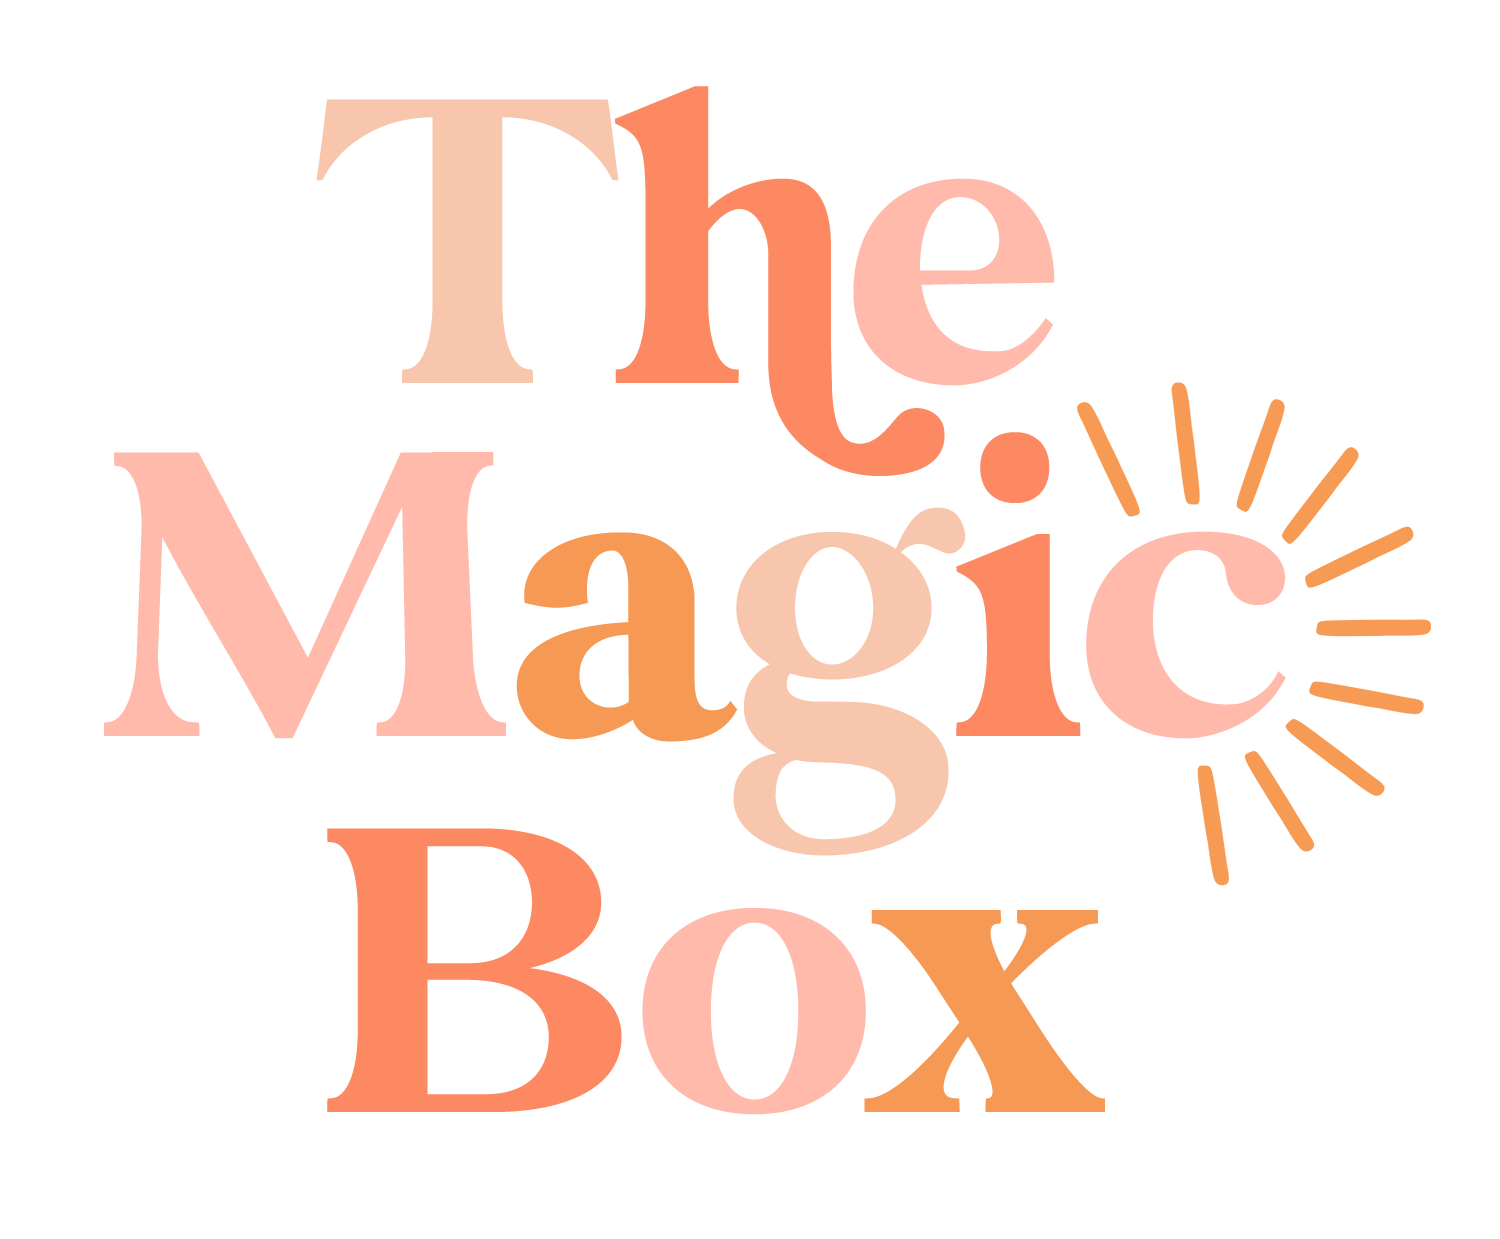 ITEM NUMBER 023154 PIVOT MAGIC BOX 6 PIECES PER DISPLAY – Novelty Closeout